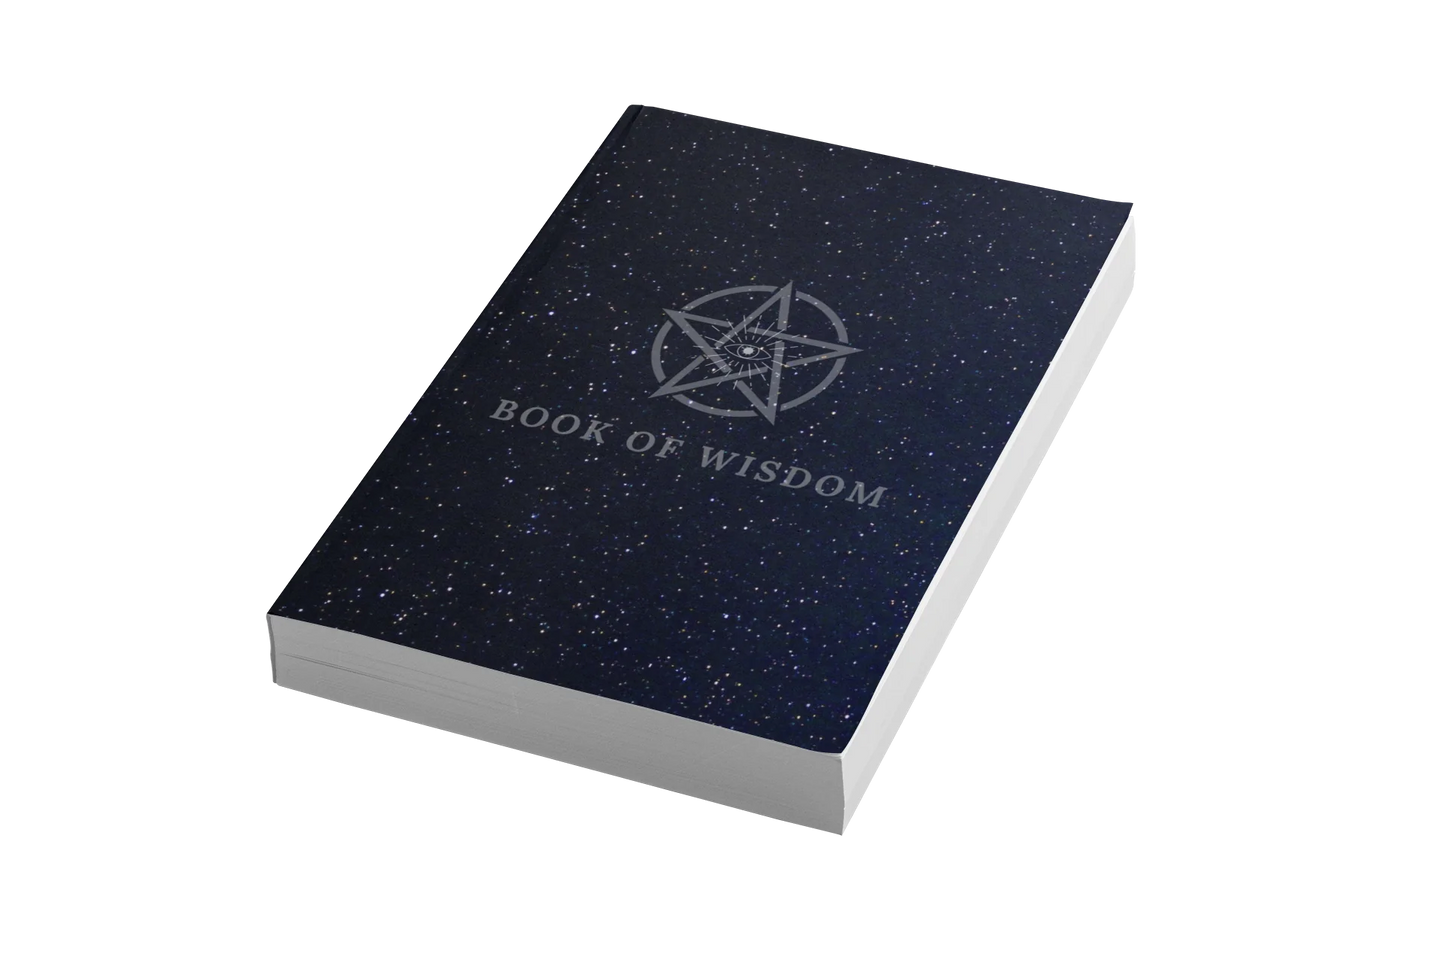 Book Of Wisdom - THE WHITE RABBIT SHOP